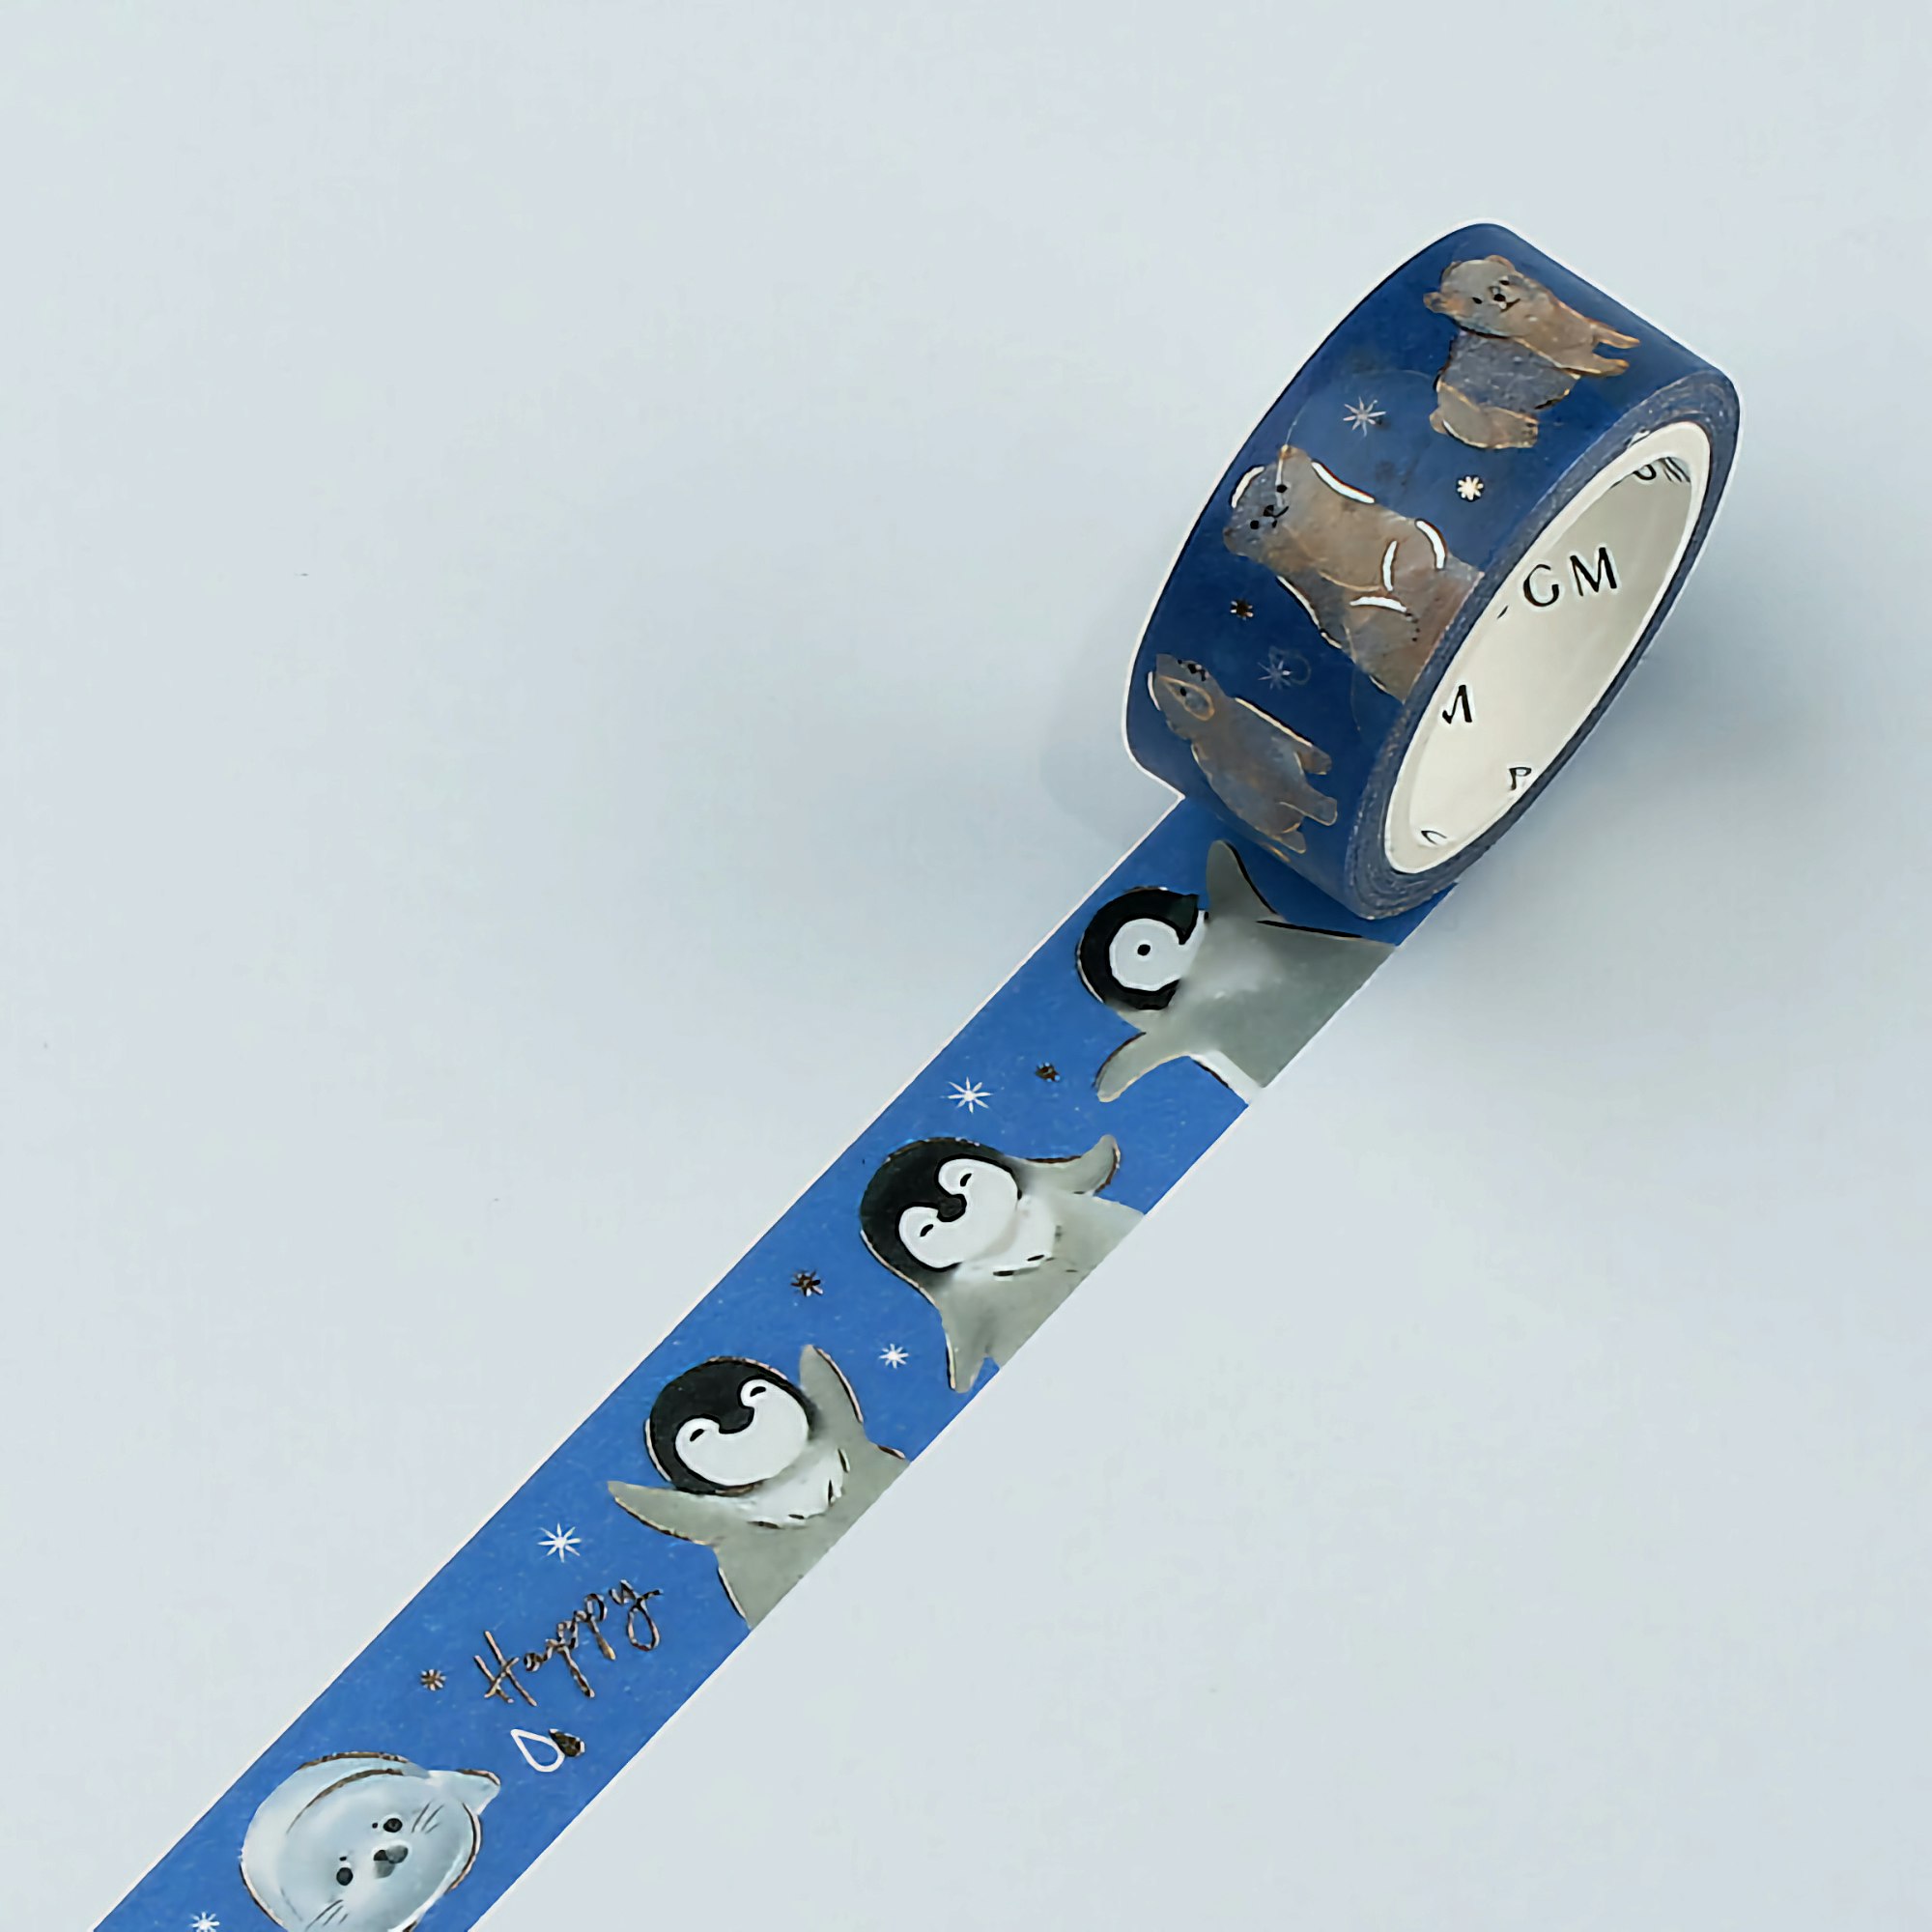 BGM Twinkle Star Washi Tape Gold Foil Masking Tape Blue 20mm x 5m